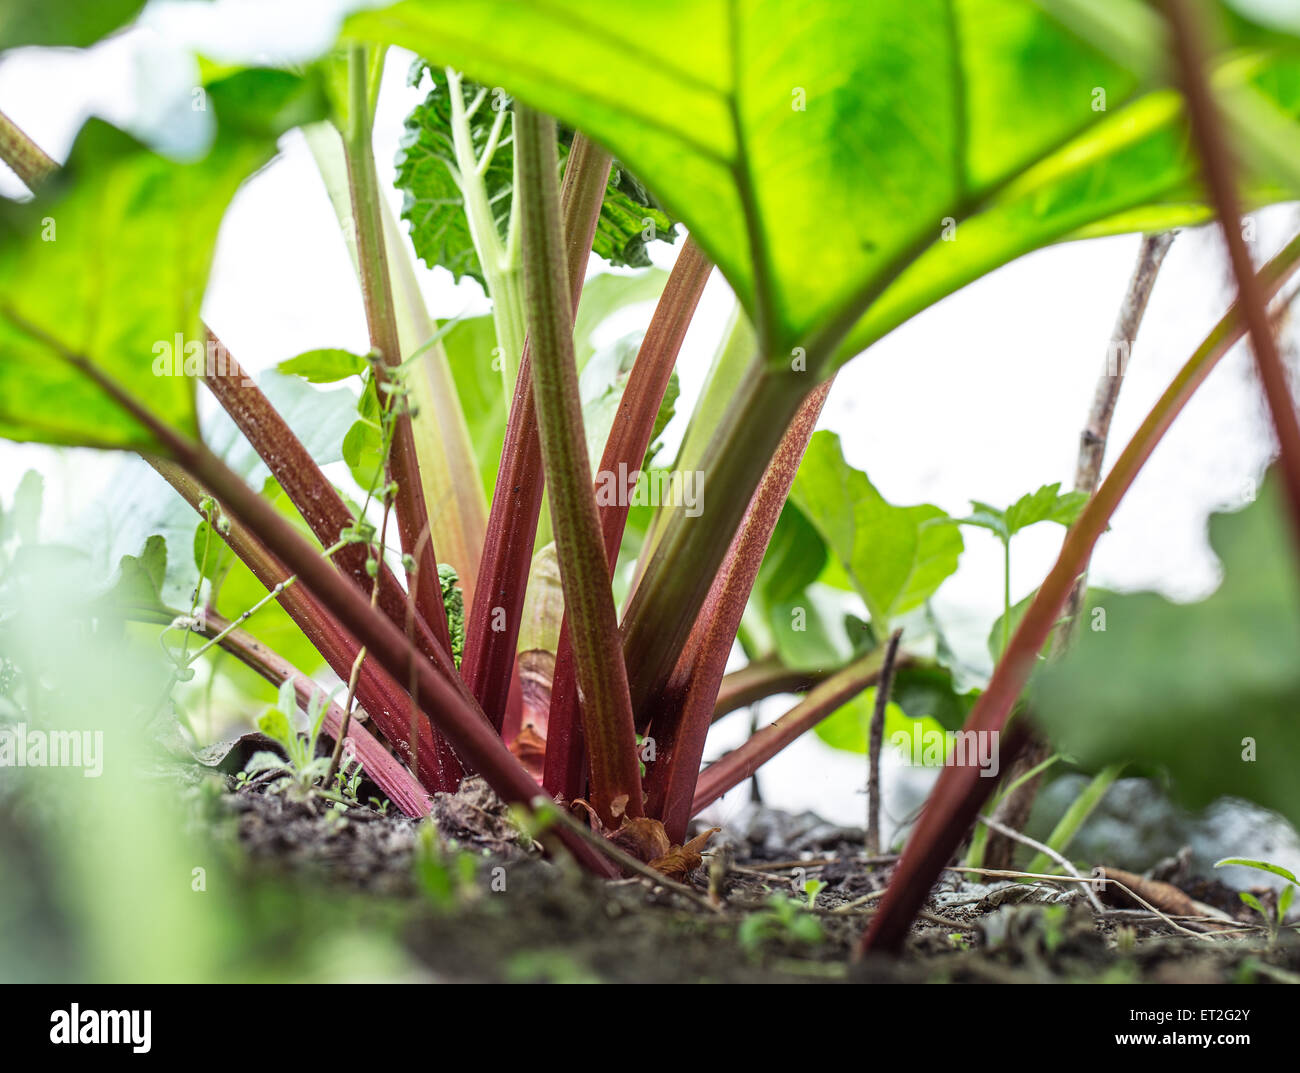 Rhubarb stalks grow in the garden. Stock Photo